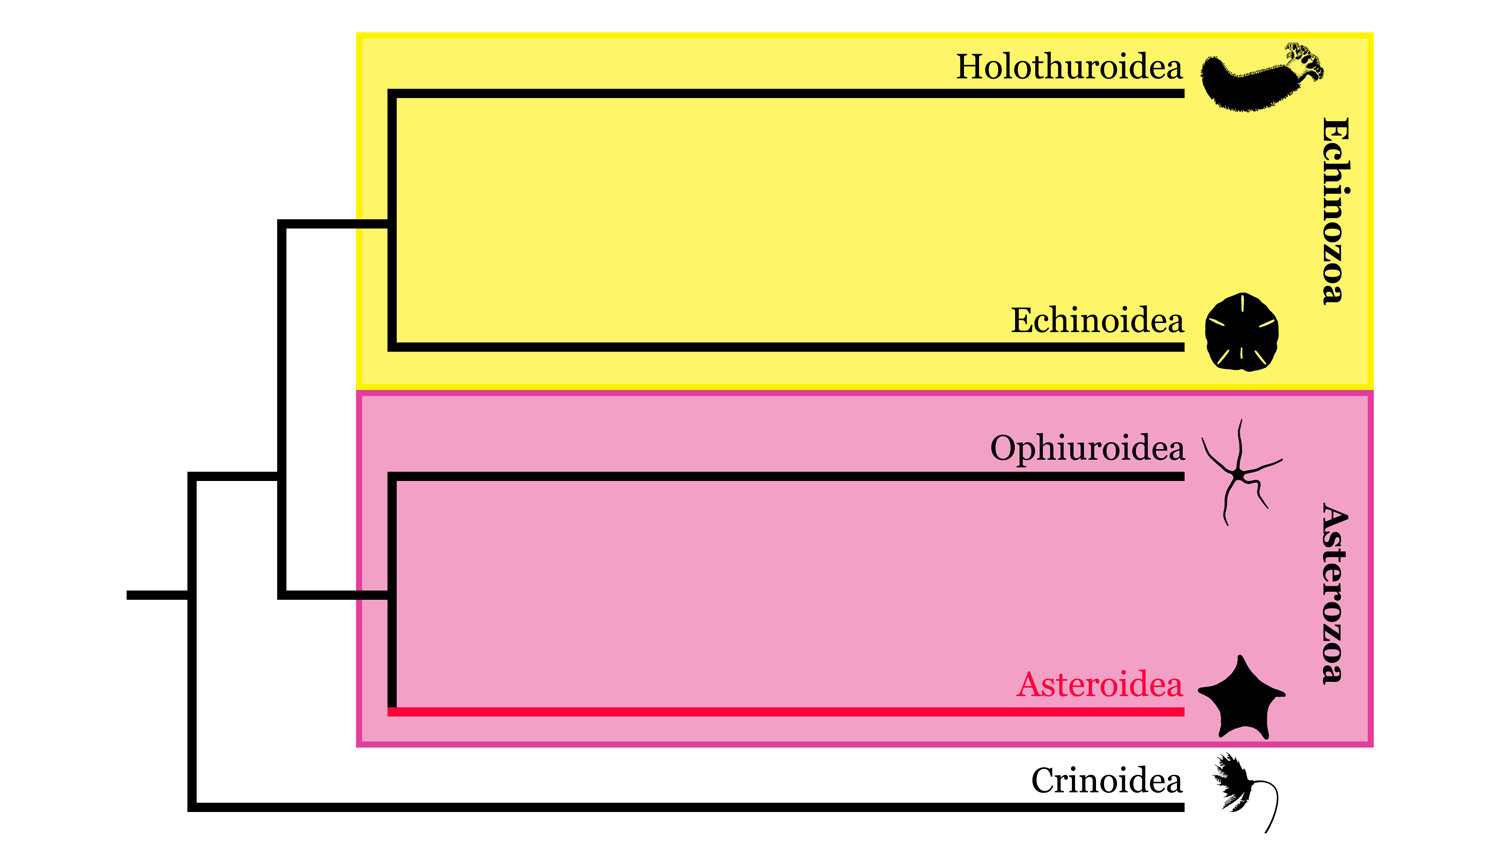 Image of echinodermata phylogeny highlighting Asteroidea